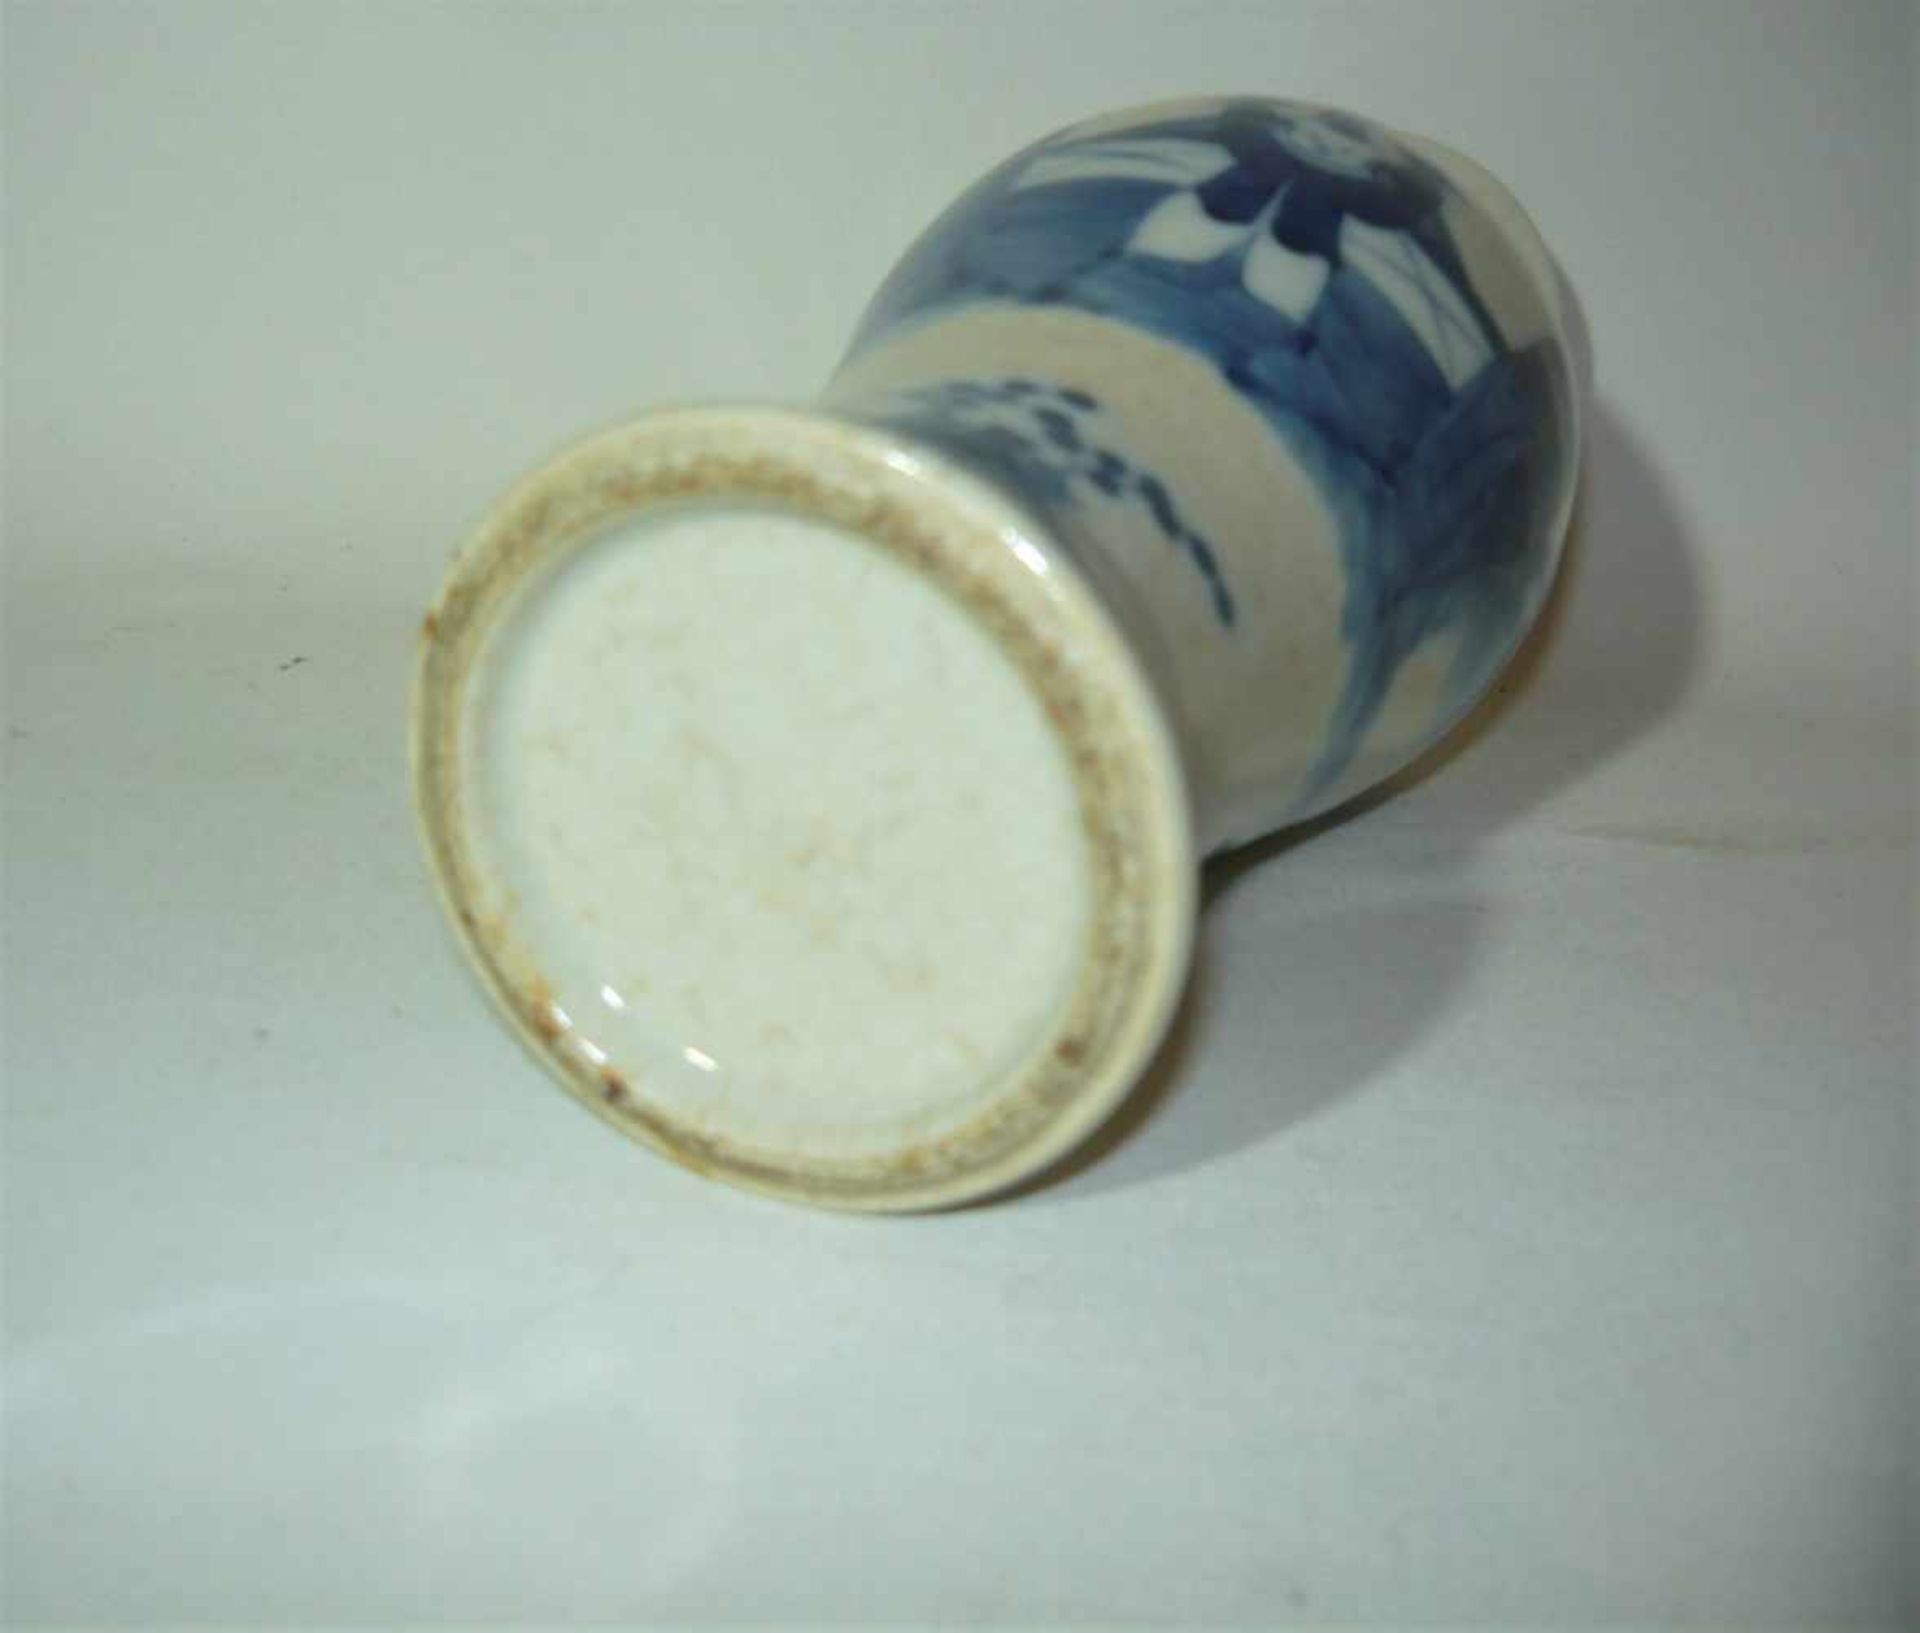 Vase mit Blaumalerei. Antik. Ca. 26cm.- - -22.00 % buyer's premium on the hammer price19.00 % VAT on - Bild 2 aus 2